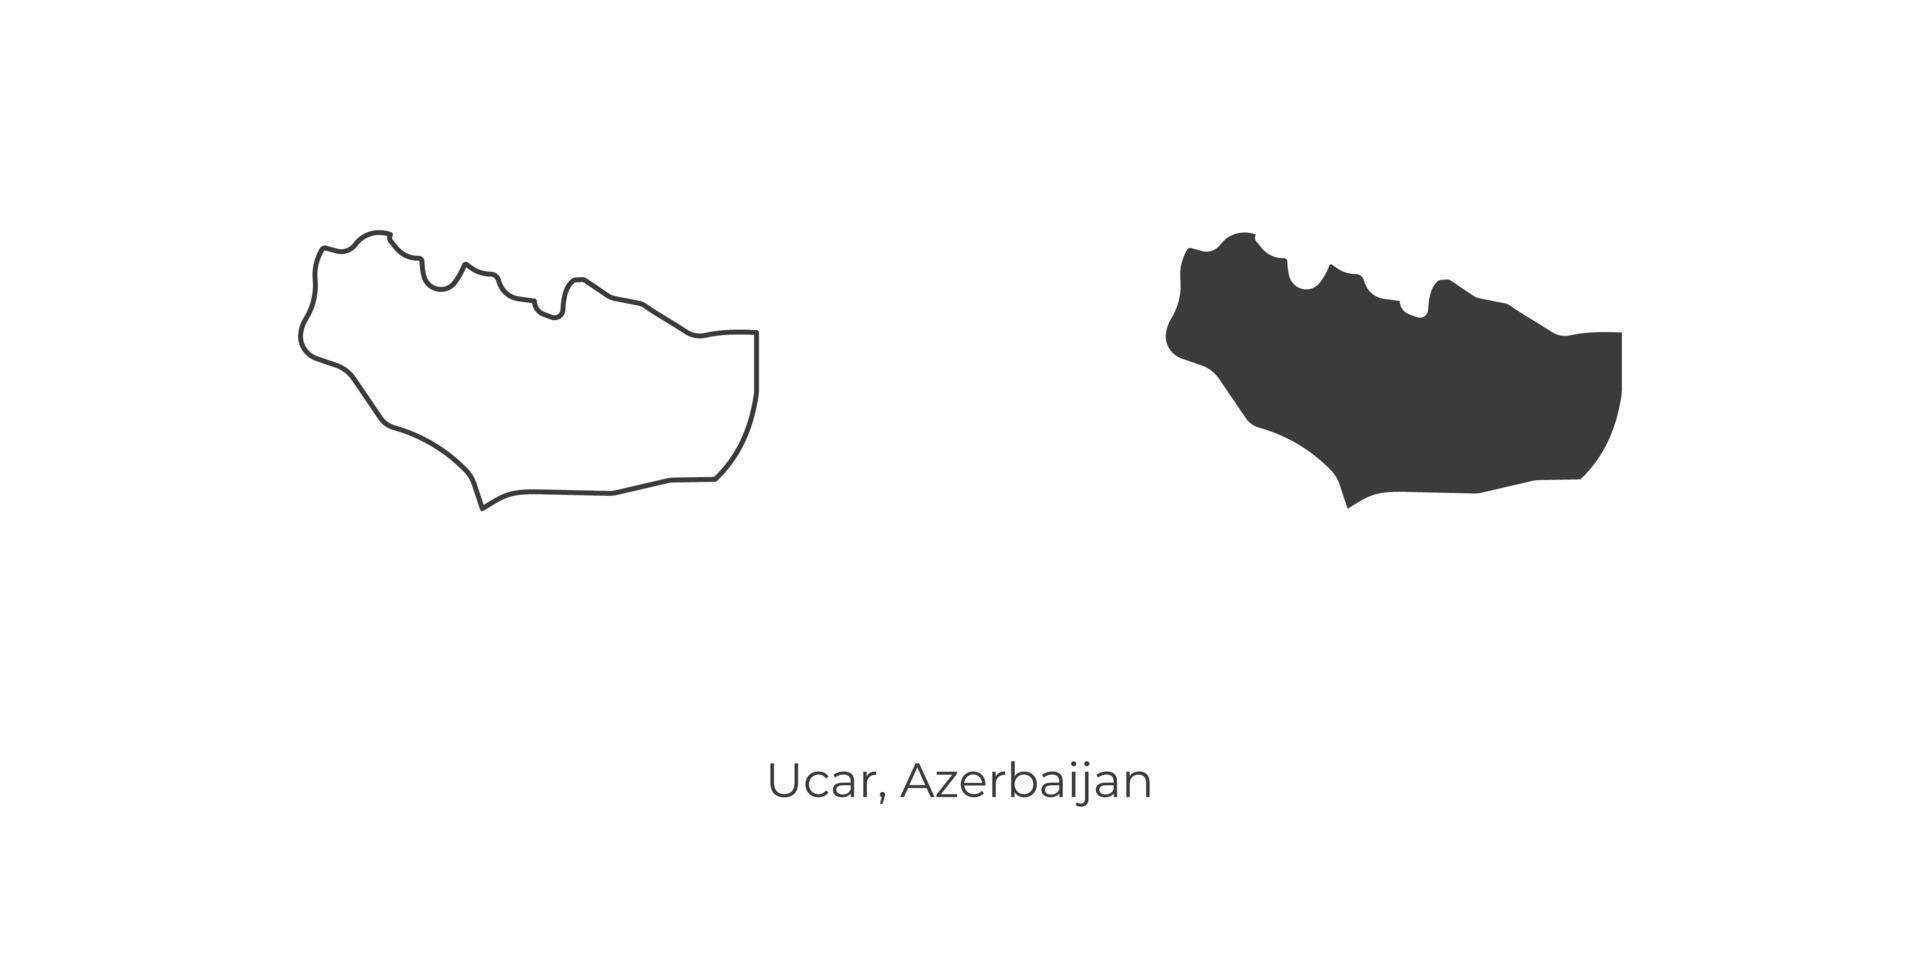 illustration vectorielle simple de la carte ucar, azerbaïdjan. vecteur